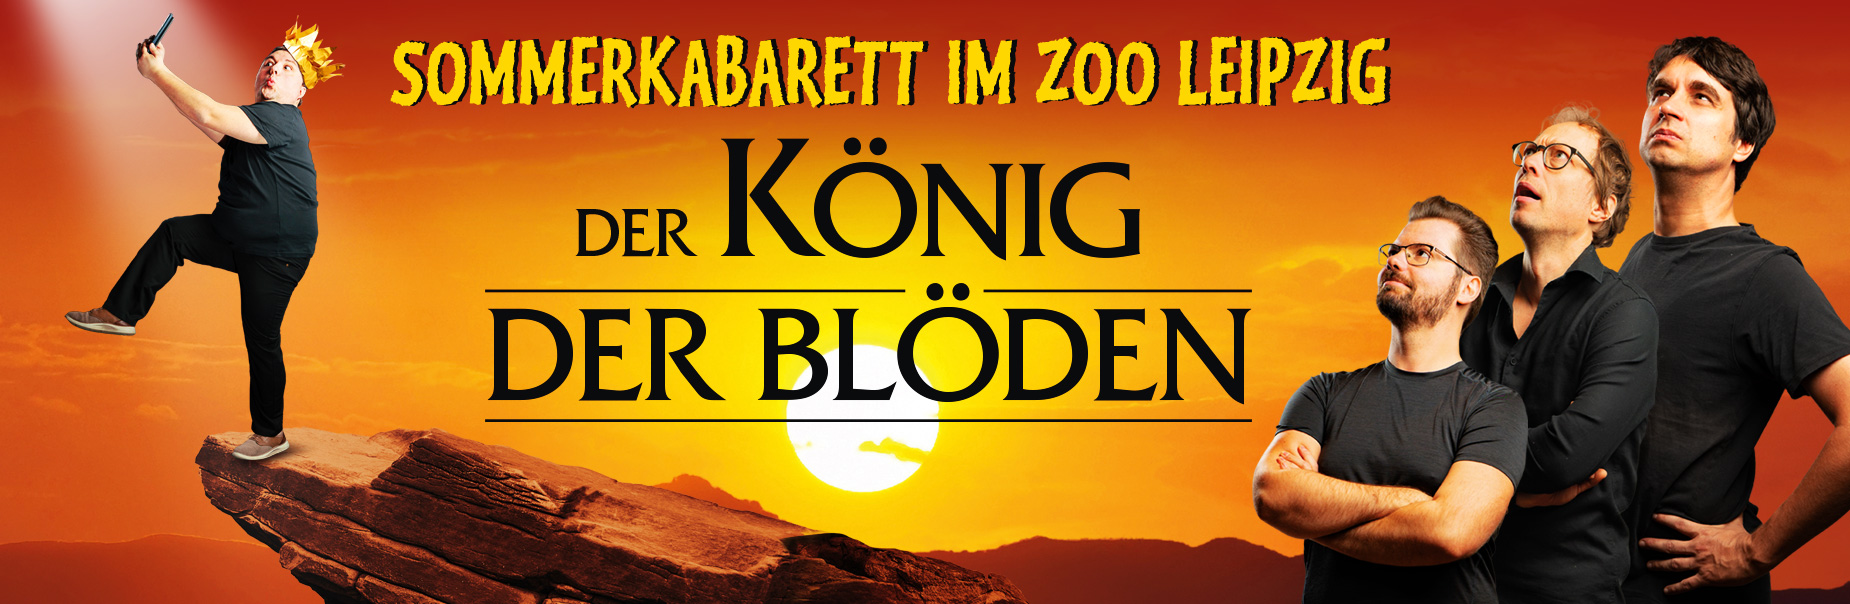 König der Blöden - Sommerkabarett im Zoo Leipzig